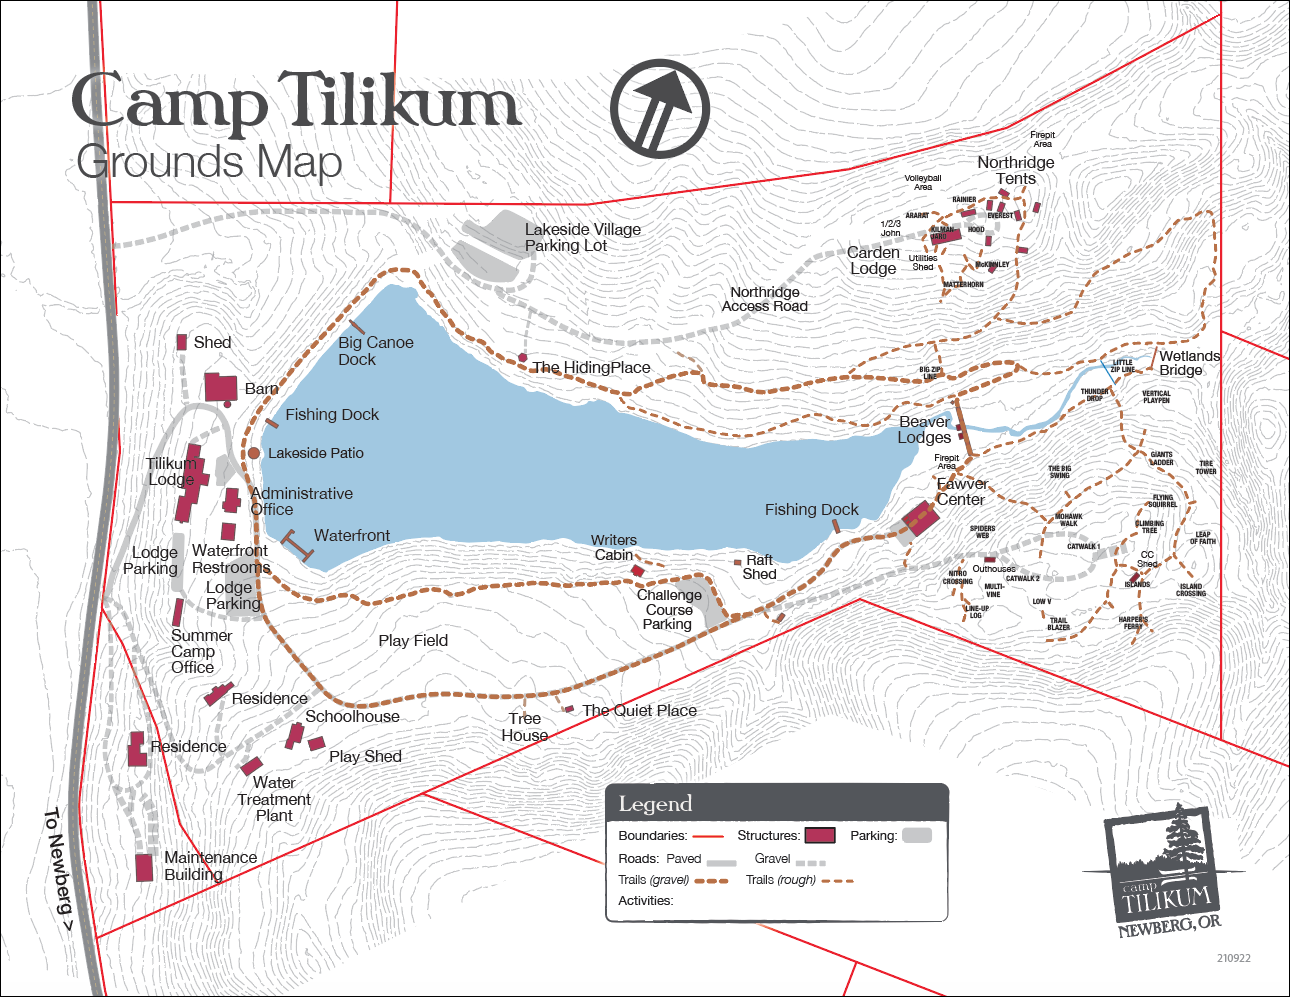 Camp Tilikum GroundsMap